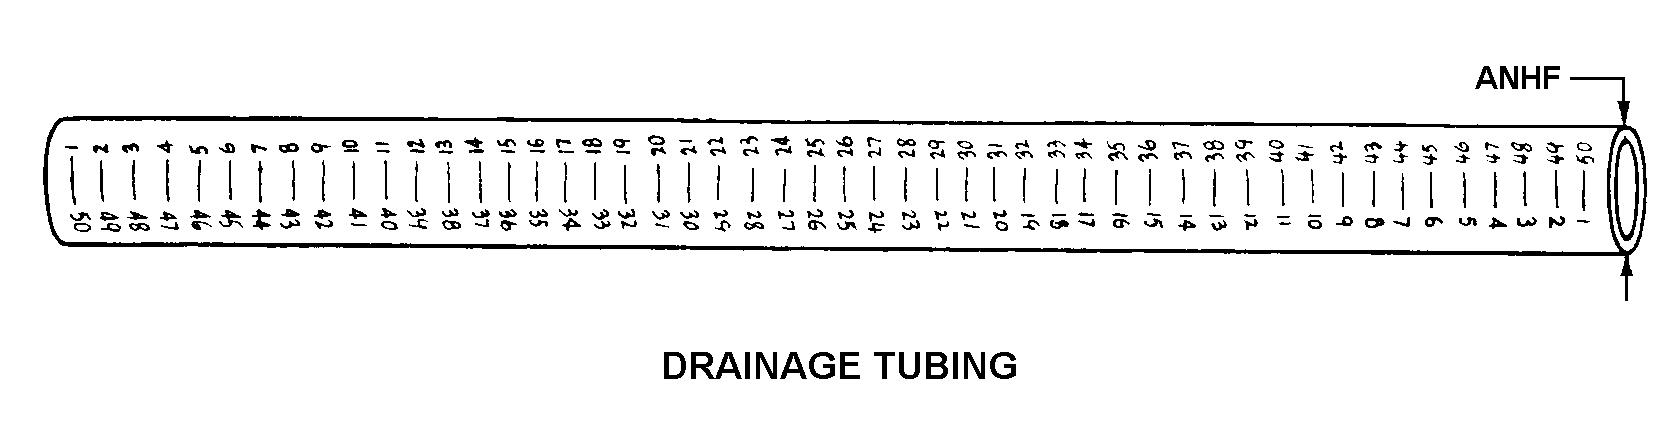 DRAINAGE TUBING style nsn 6515-01-066-6538